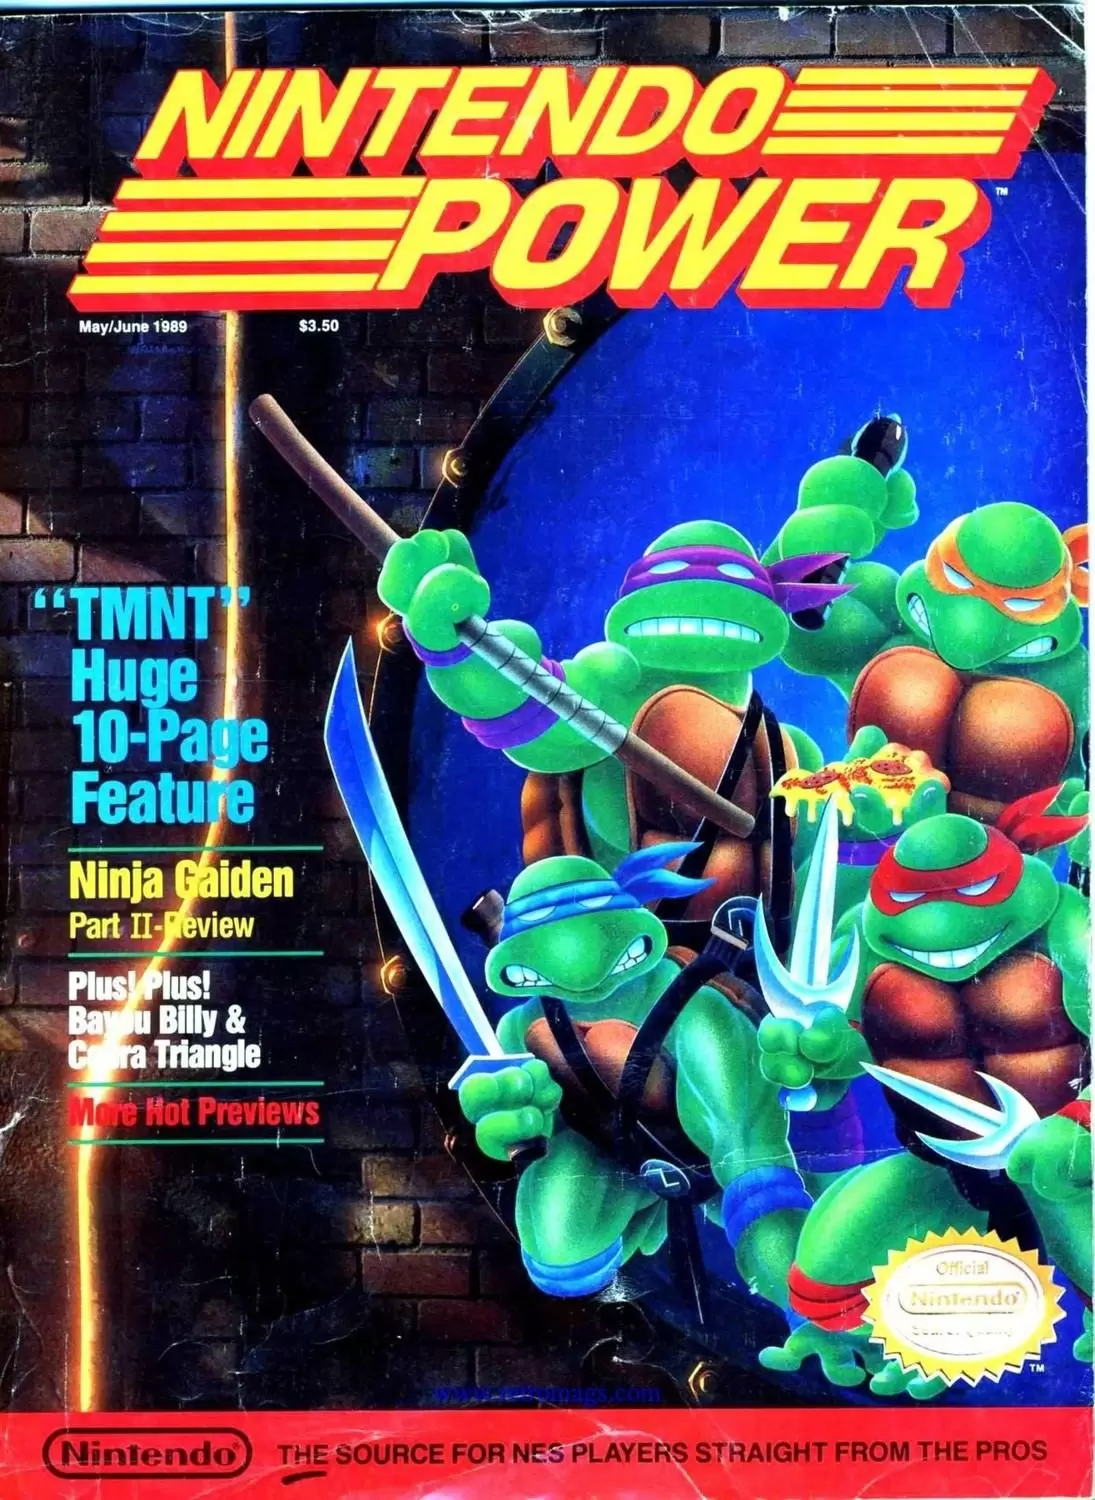 Nintendo Power Magazine - Nintendo Power Volume 6